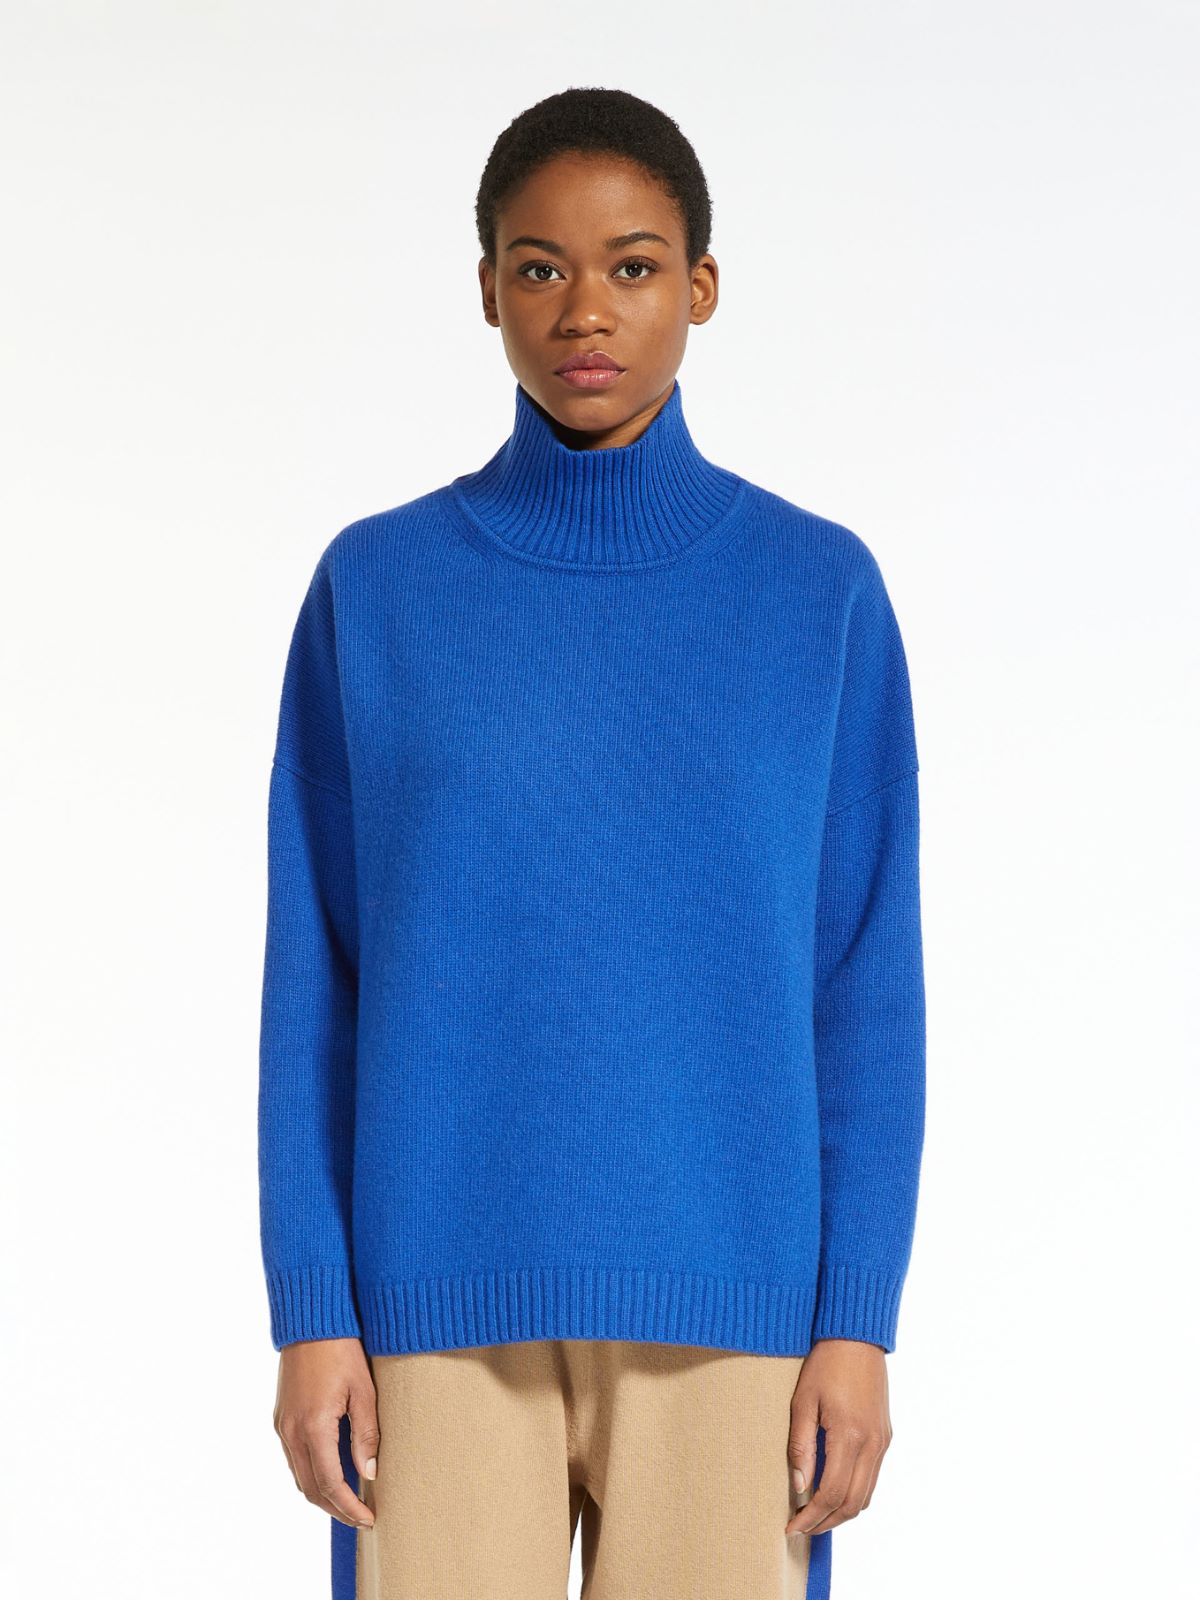 Wool yarn sweater - CORNFLOWER BLUE - Weekend Max Mara - 2